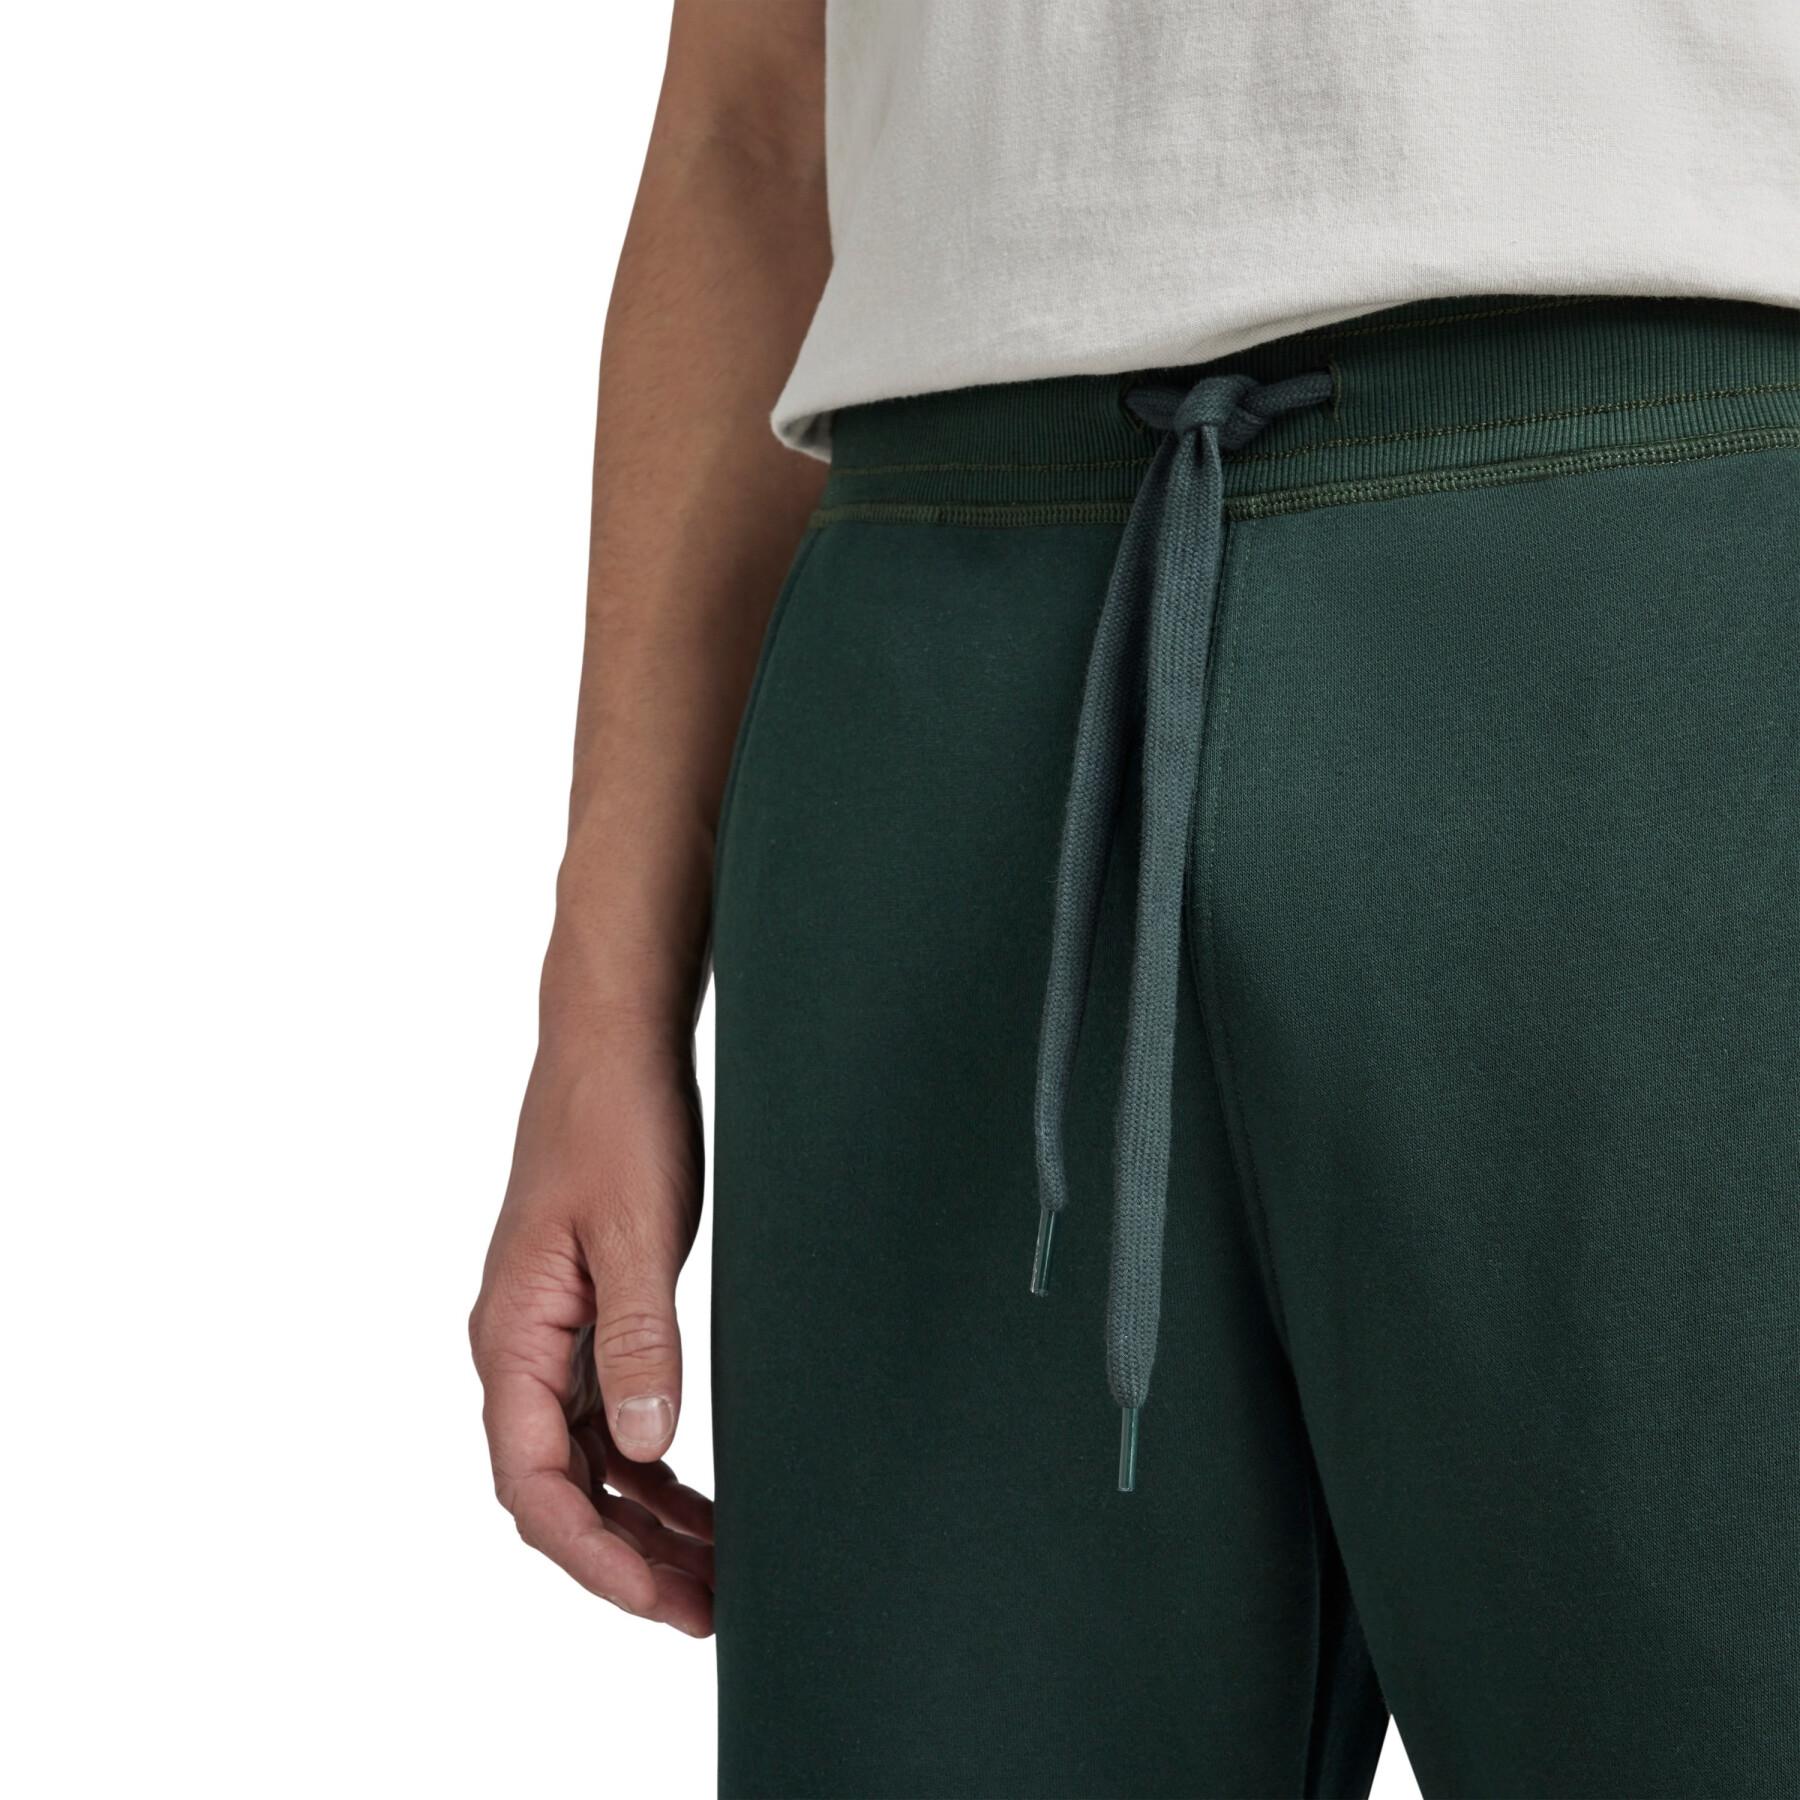 Pantalón de jogging G-Star Premium Core Type